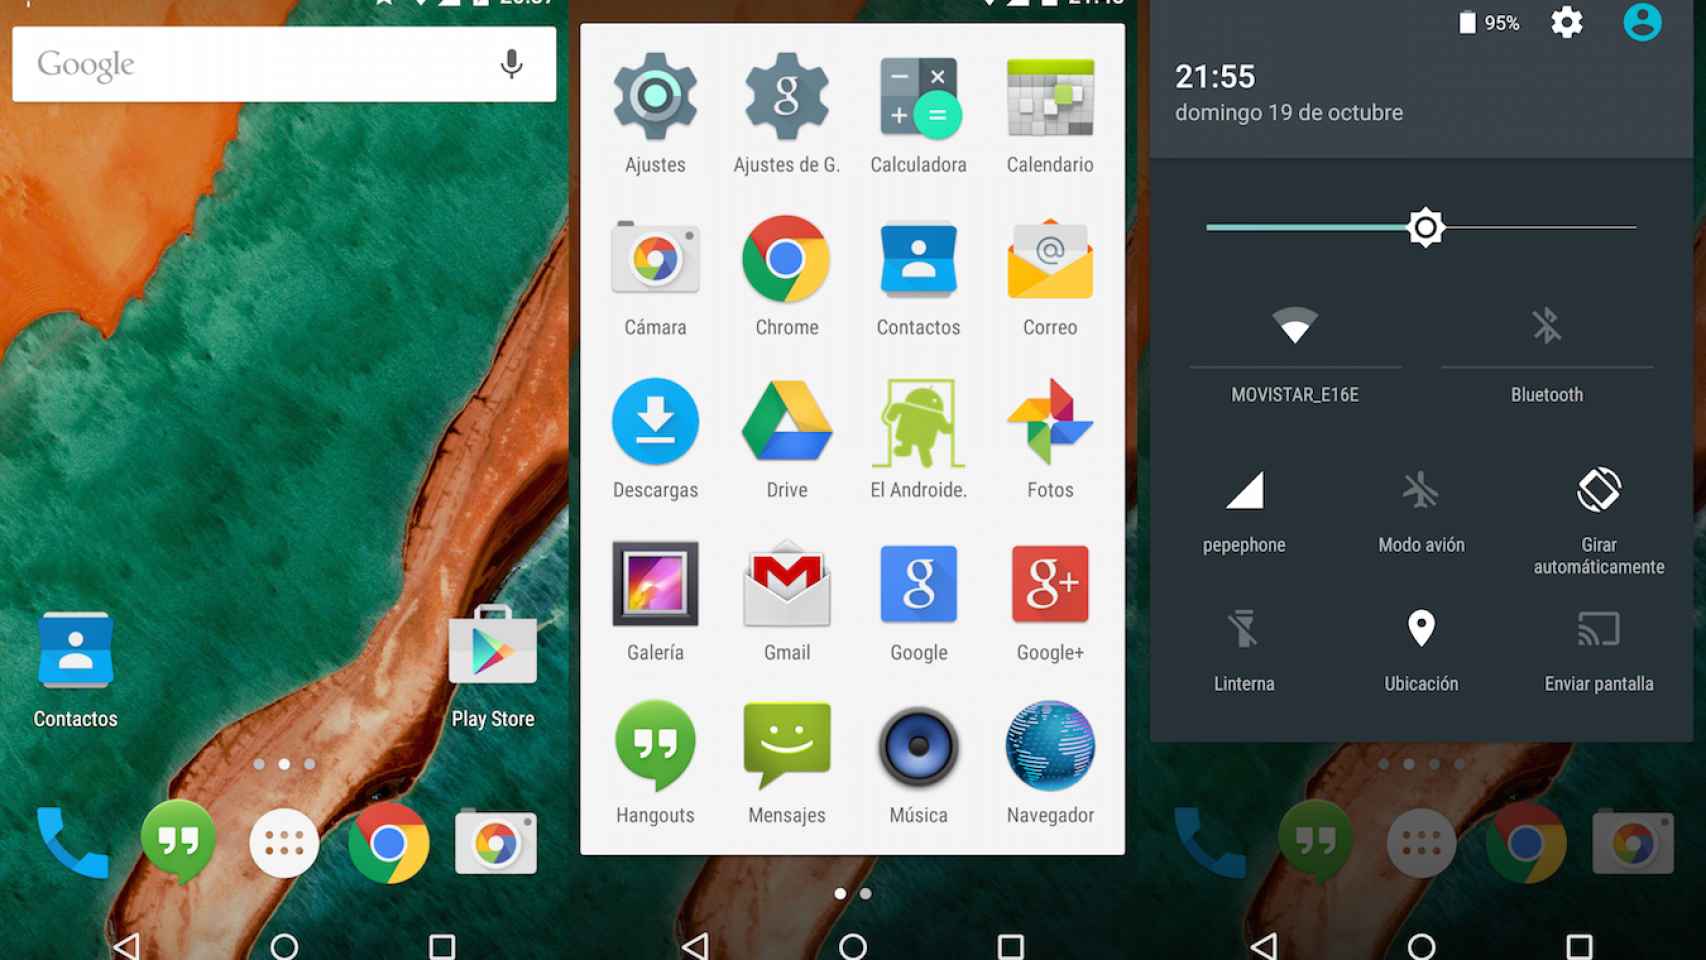 Android 5.0 Lollipop preview, primeras impresiones